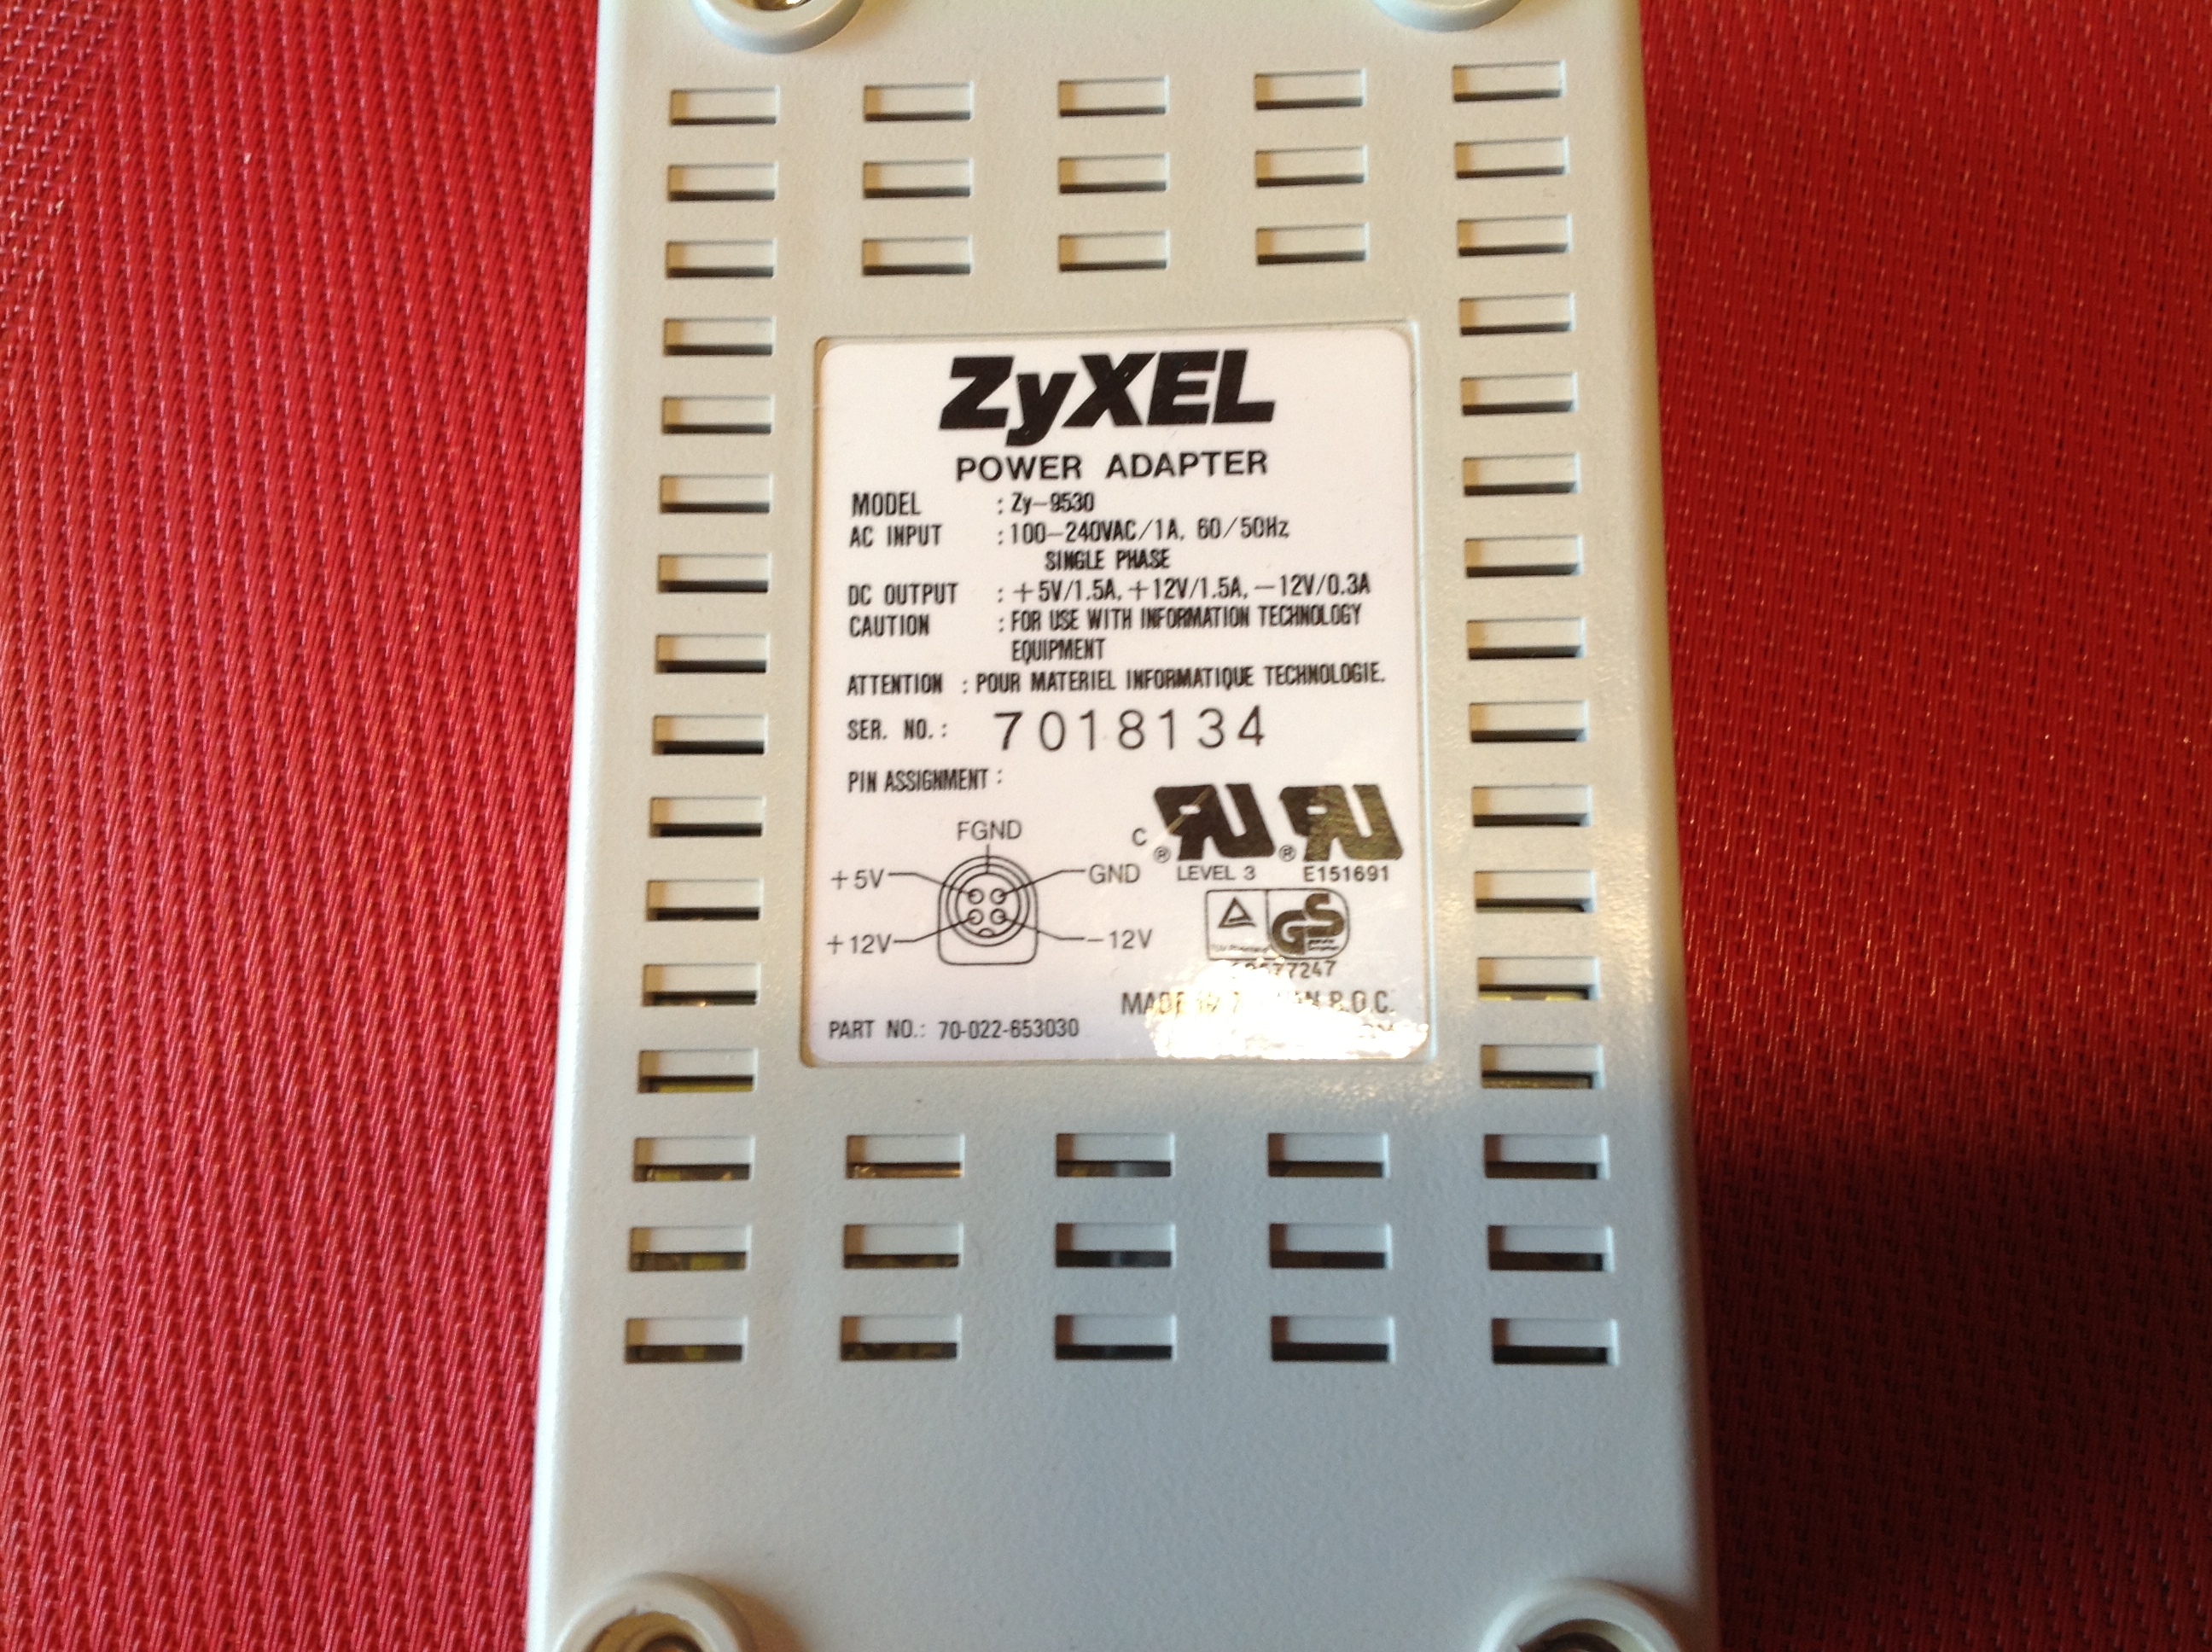 ZyXel Power Adapter Mod. Zy-9530